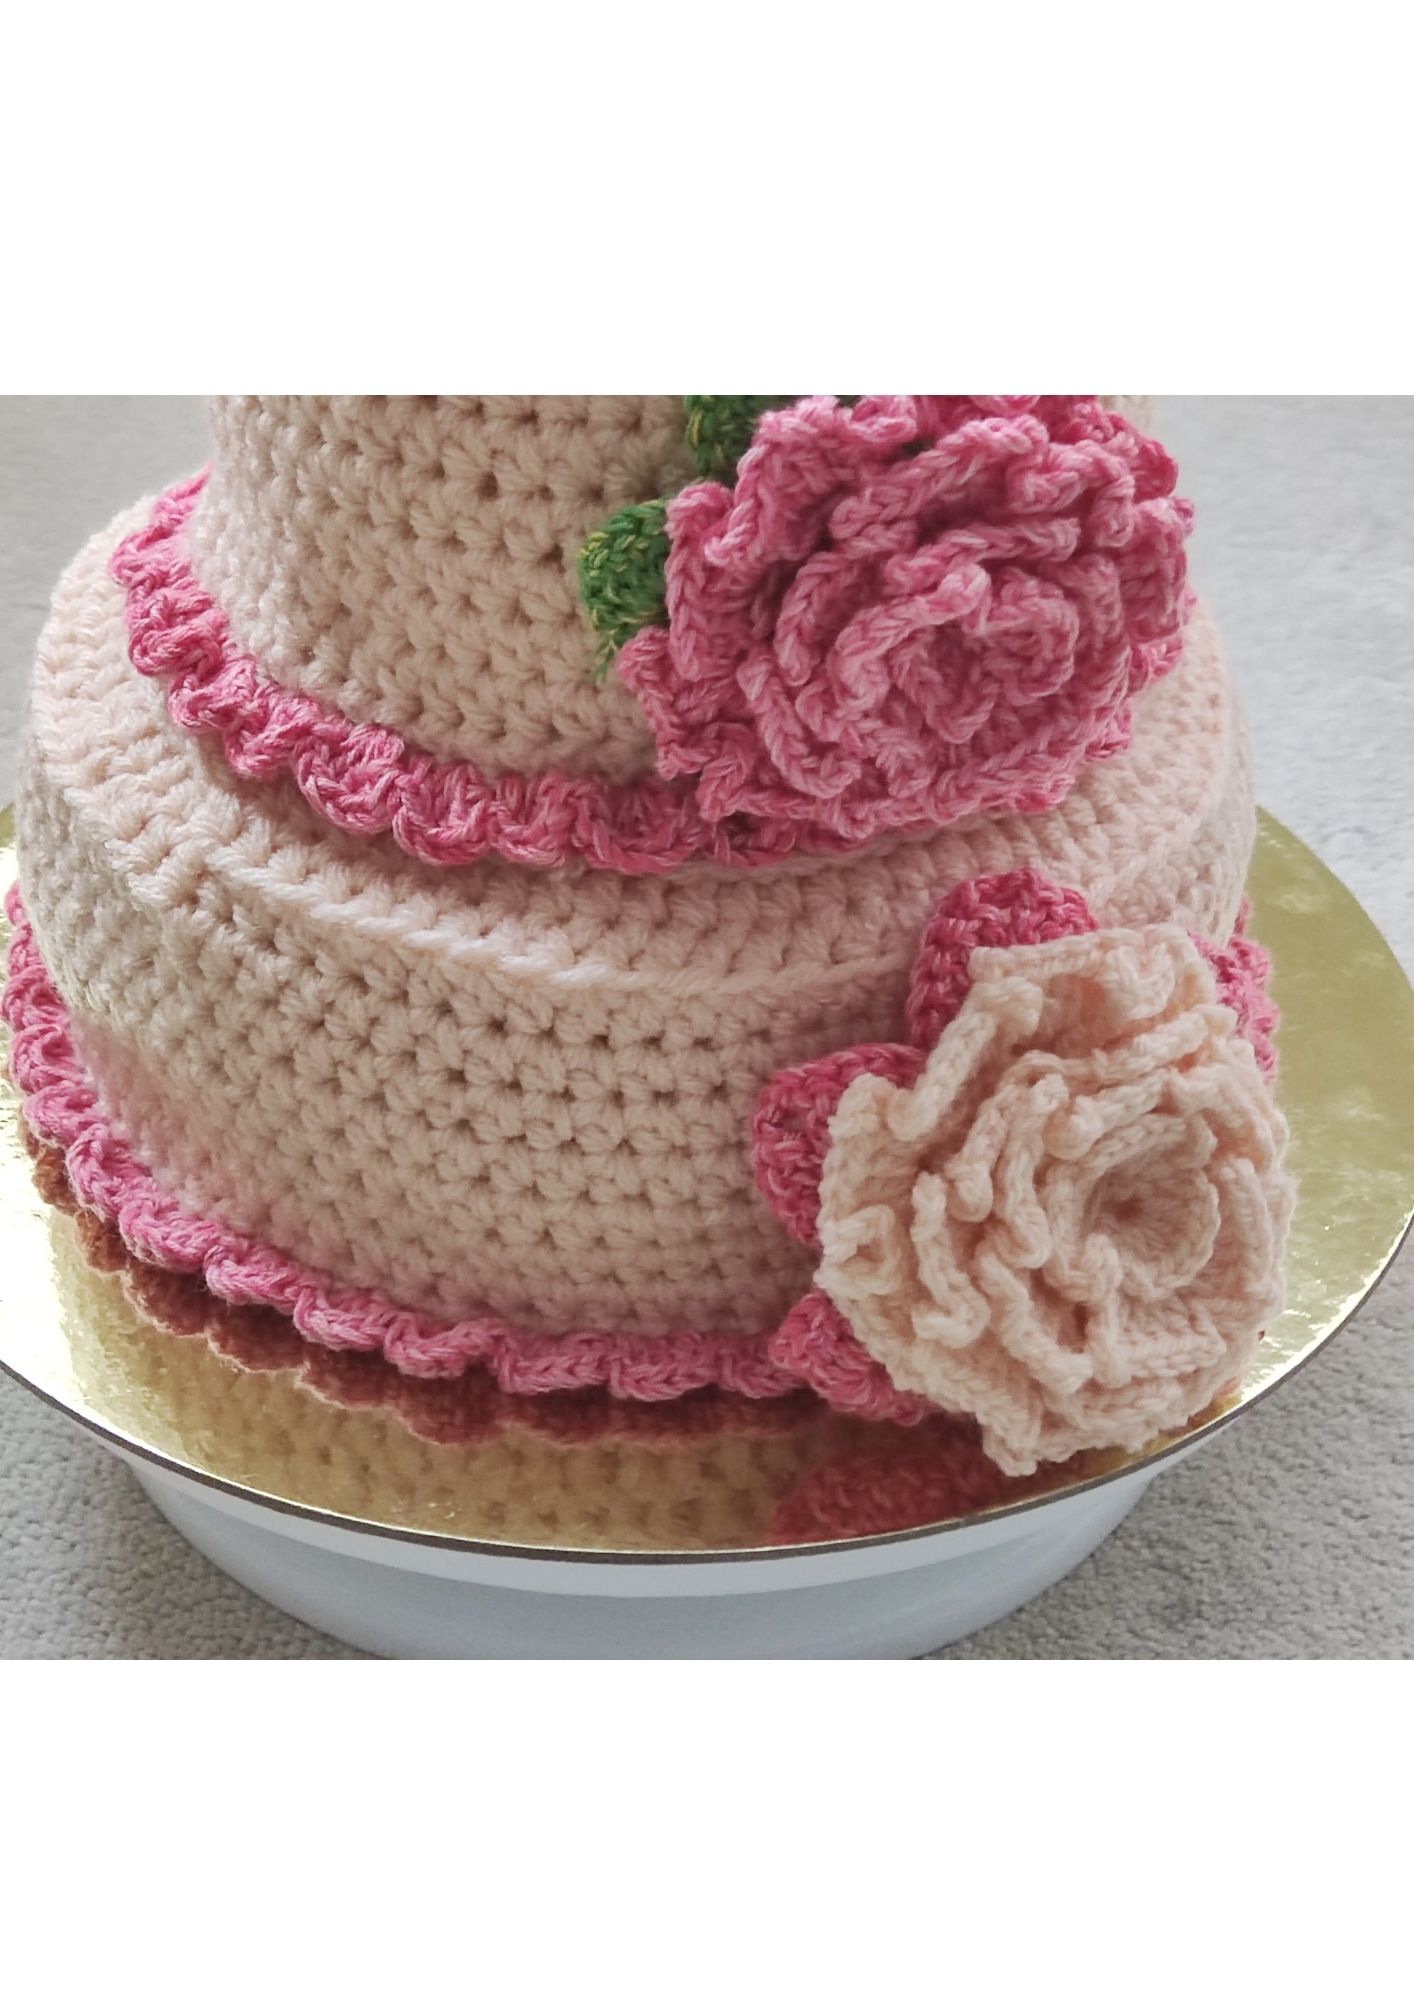 16 Crochet Cake Patterns - Crochet News